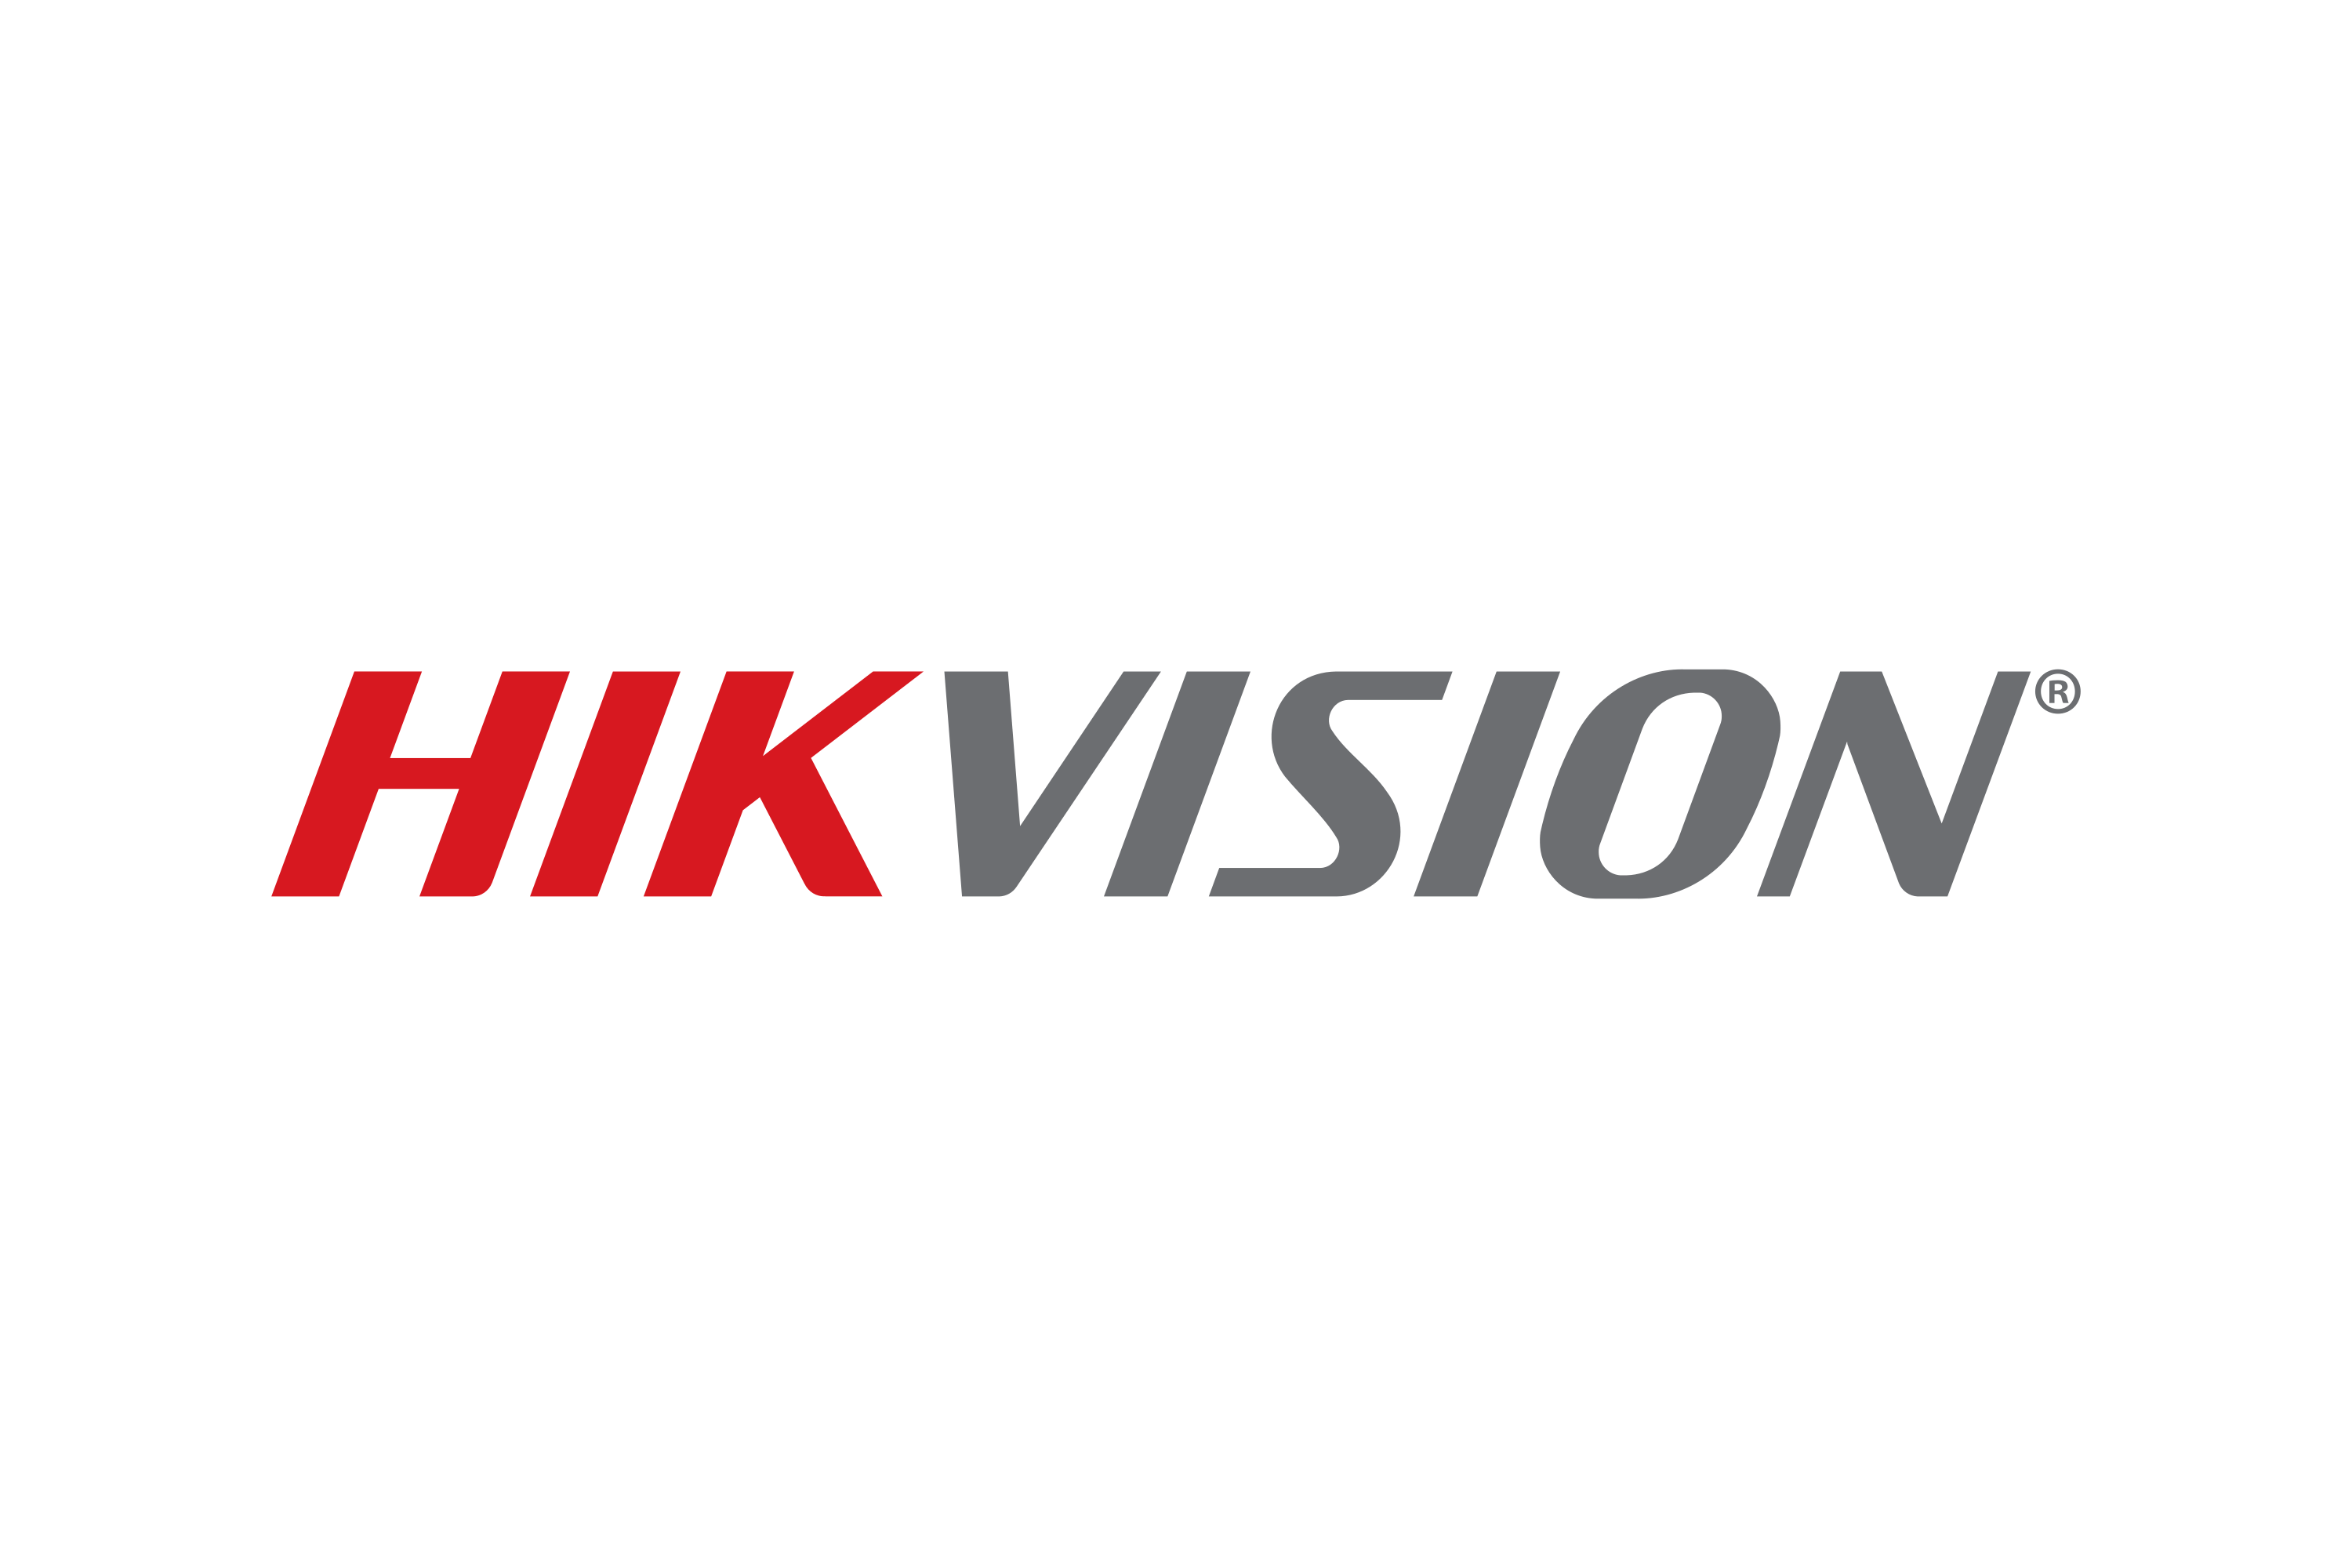 Hikvision-Logo.wine